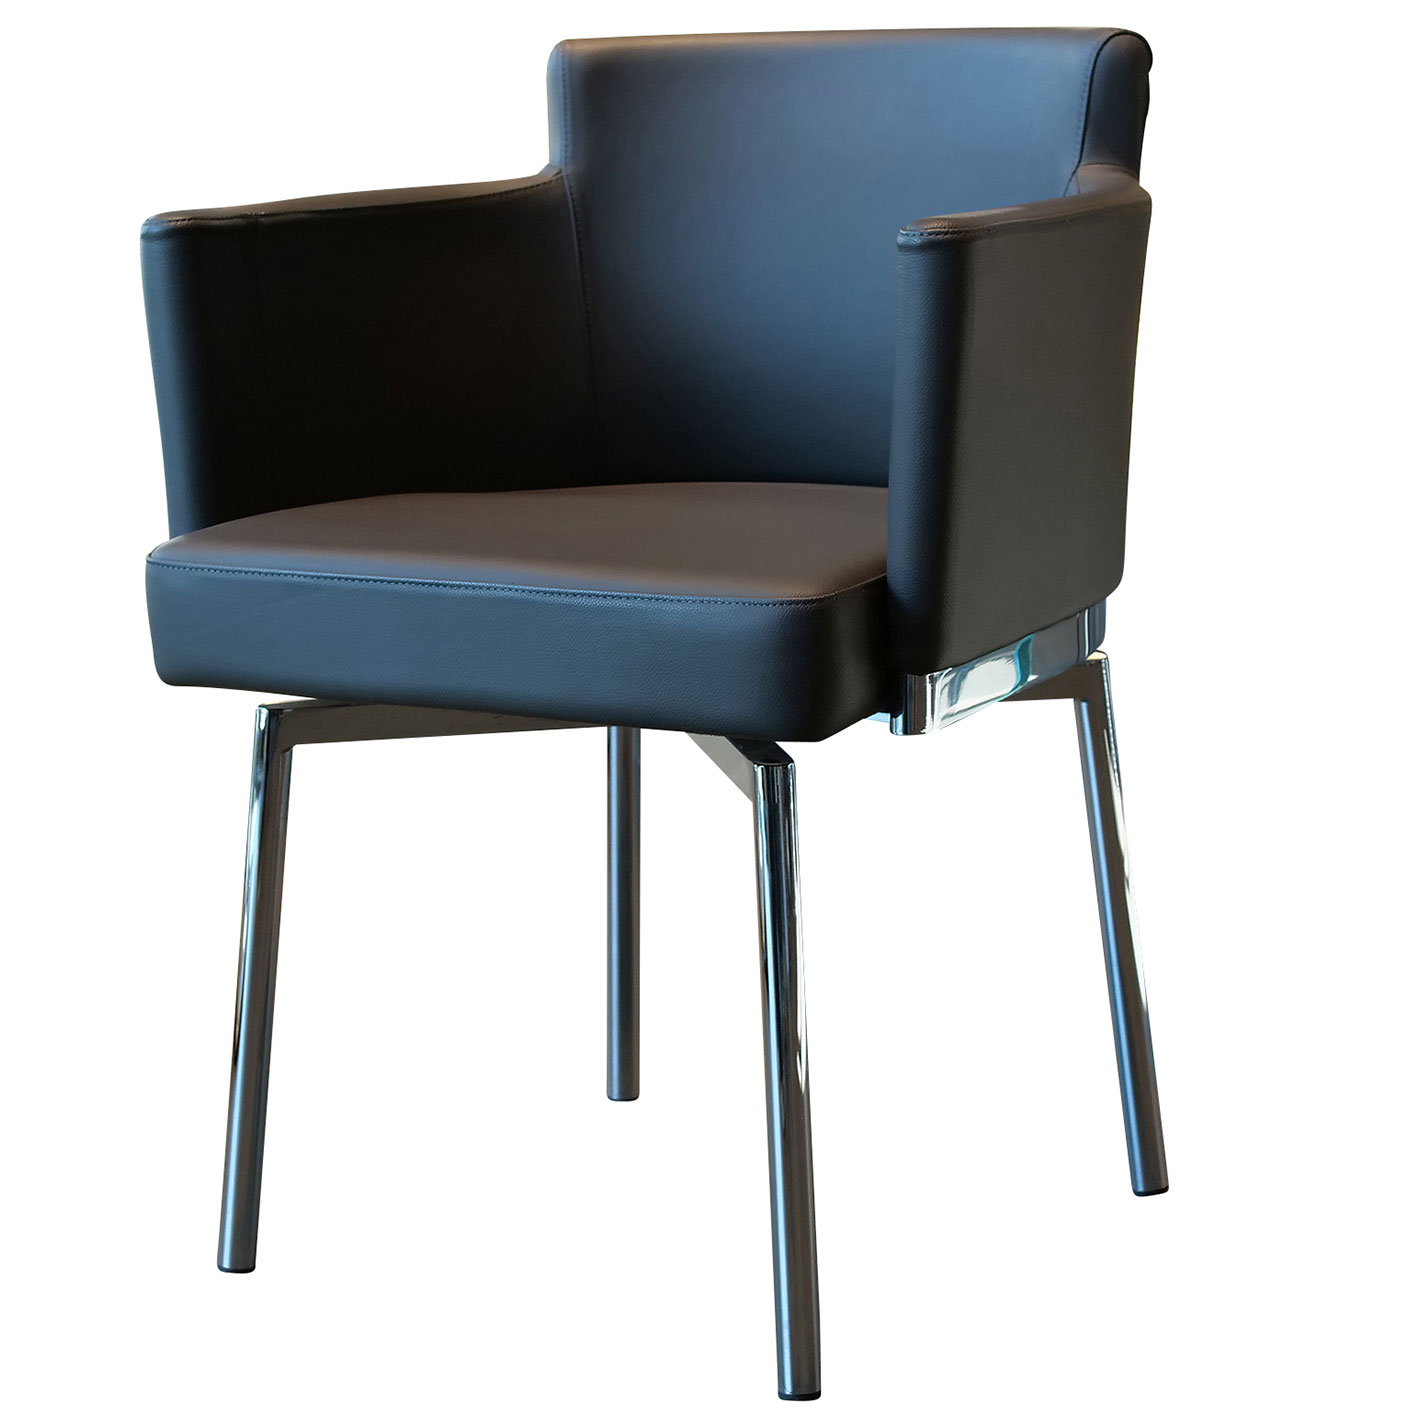 Tische & Stühle - ARTUS LEDER Armlehnstuhl